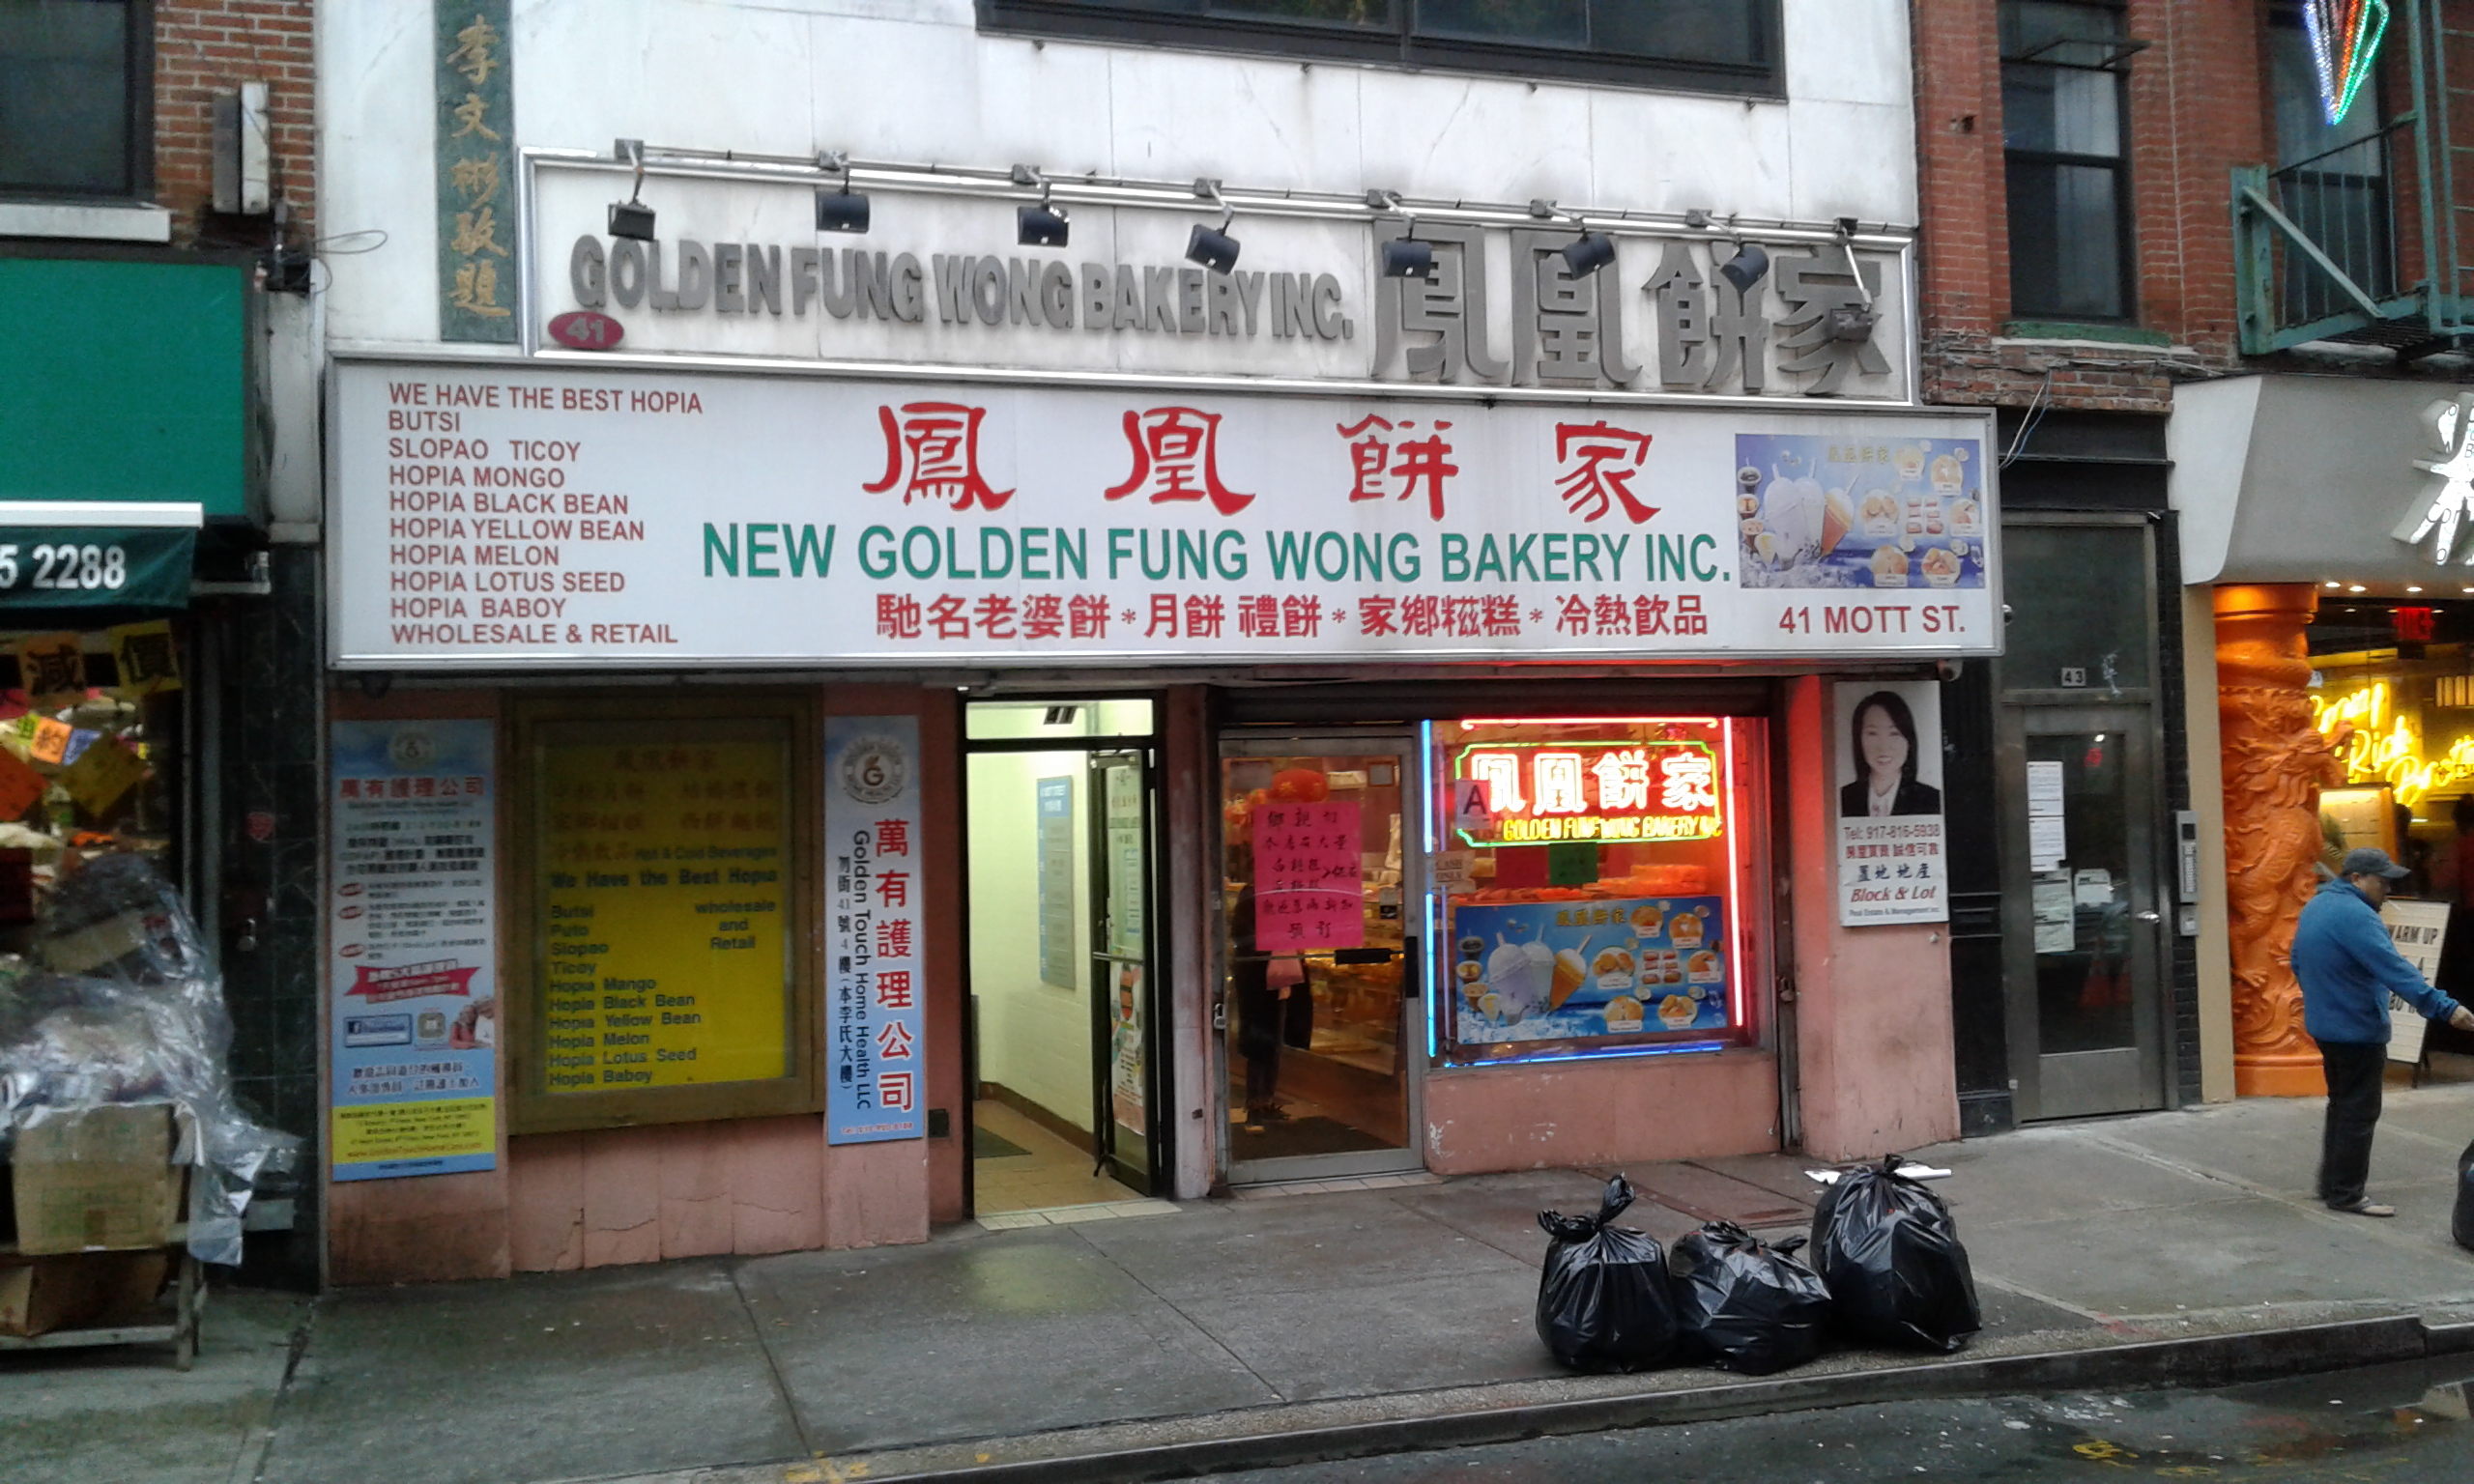 NEW GOLDEN FUNG WONG BAKERY - 191 Photos & 114 Reviews - 41 Mott St, New  York, New York - Bakeries - Phone Number - Yelp